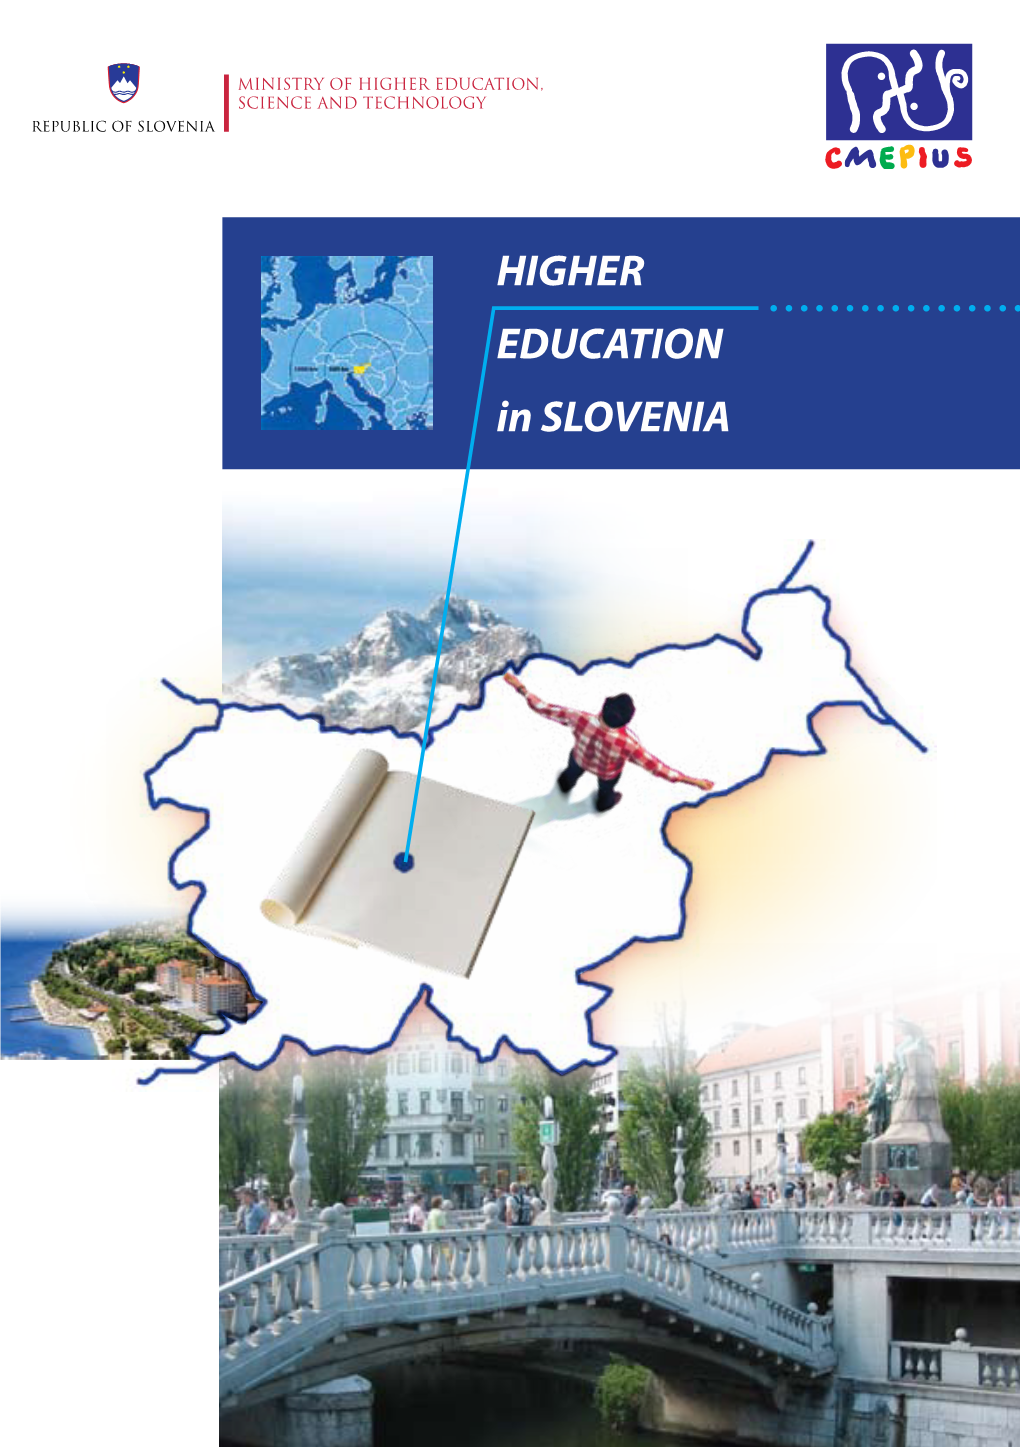 HIGHER EDUCATION in SLOVENIA